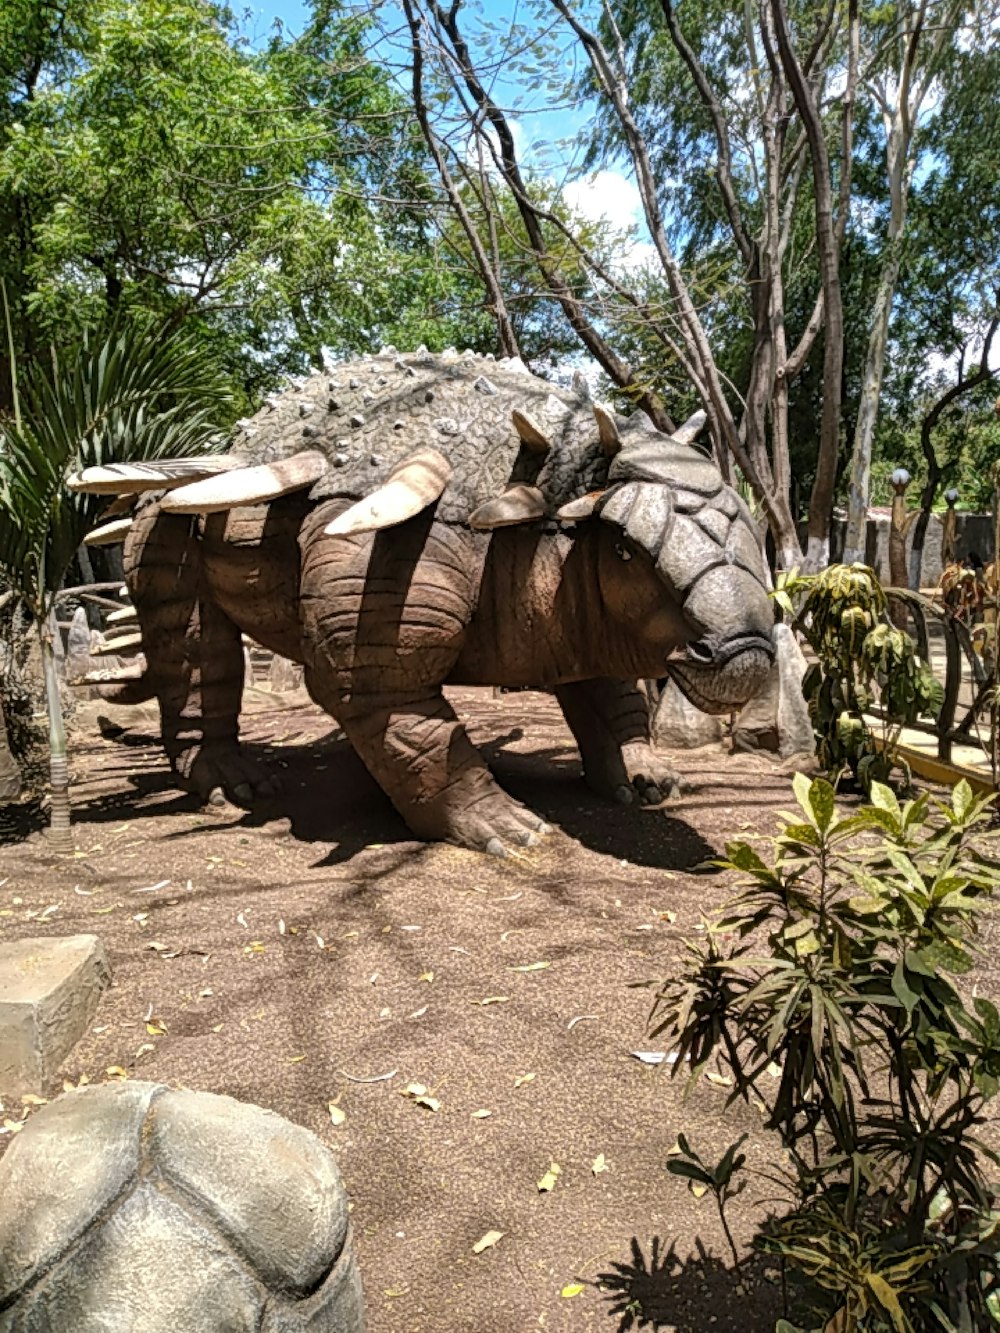 a wooden rhinoceros in a zoo enclosure